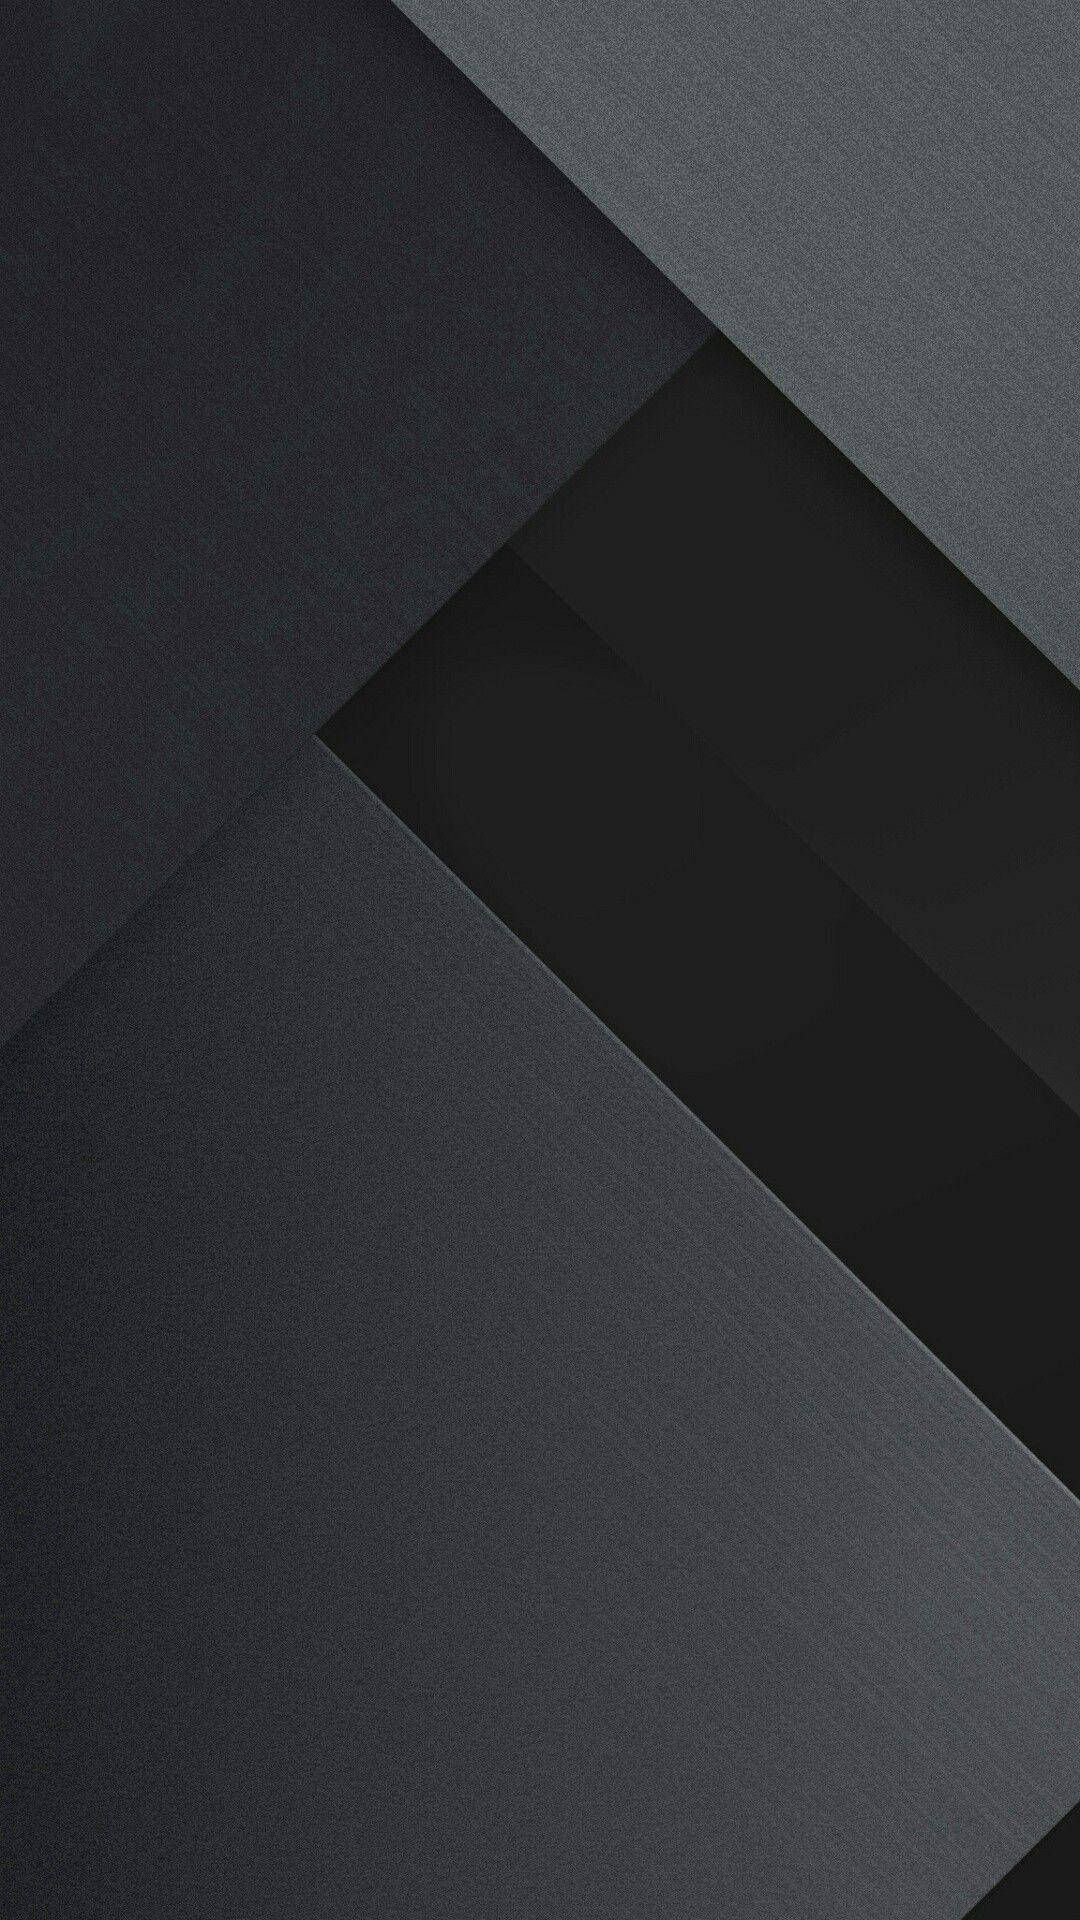 Geometric Black And Grey Iphone Background